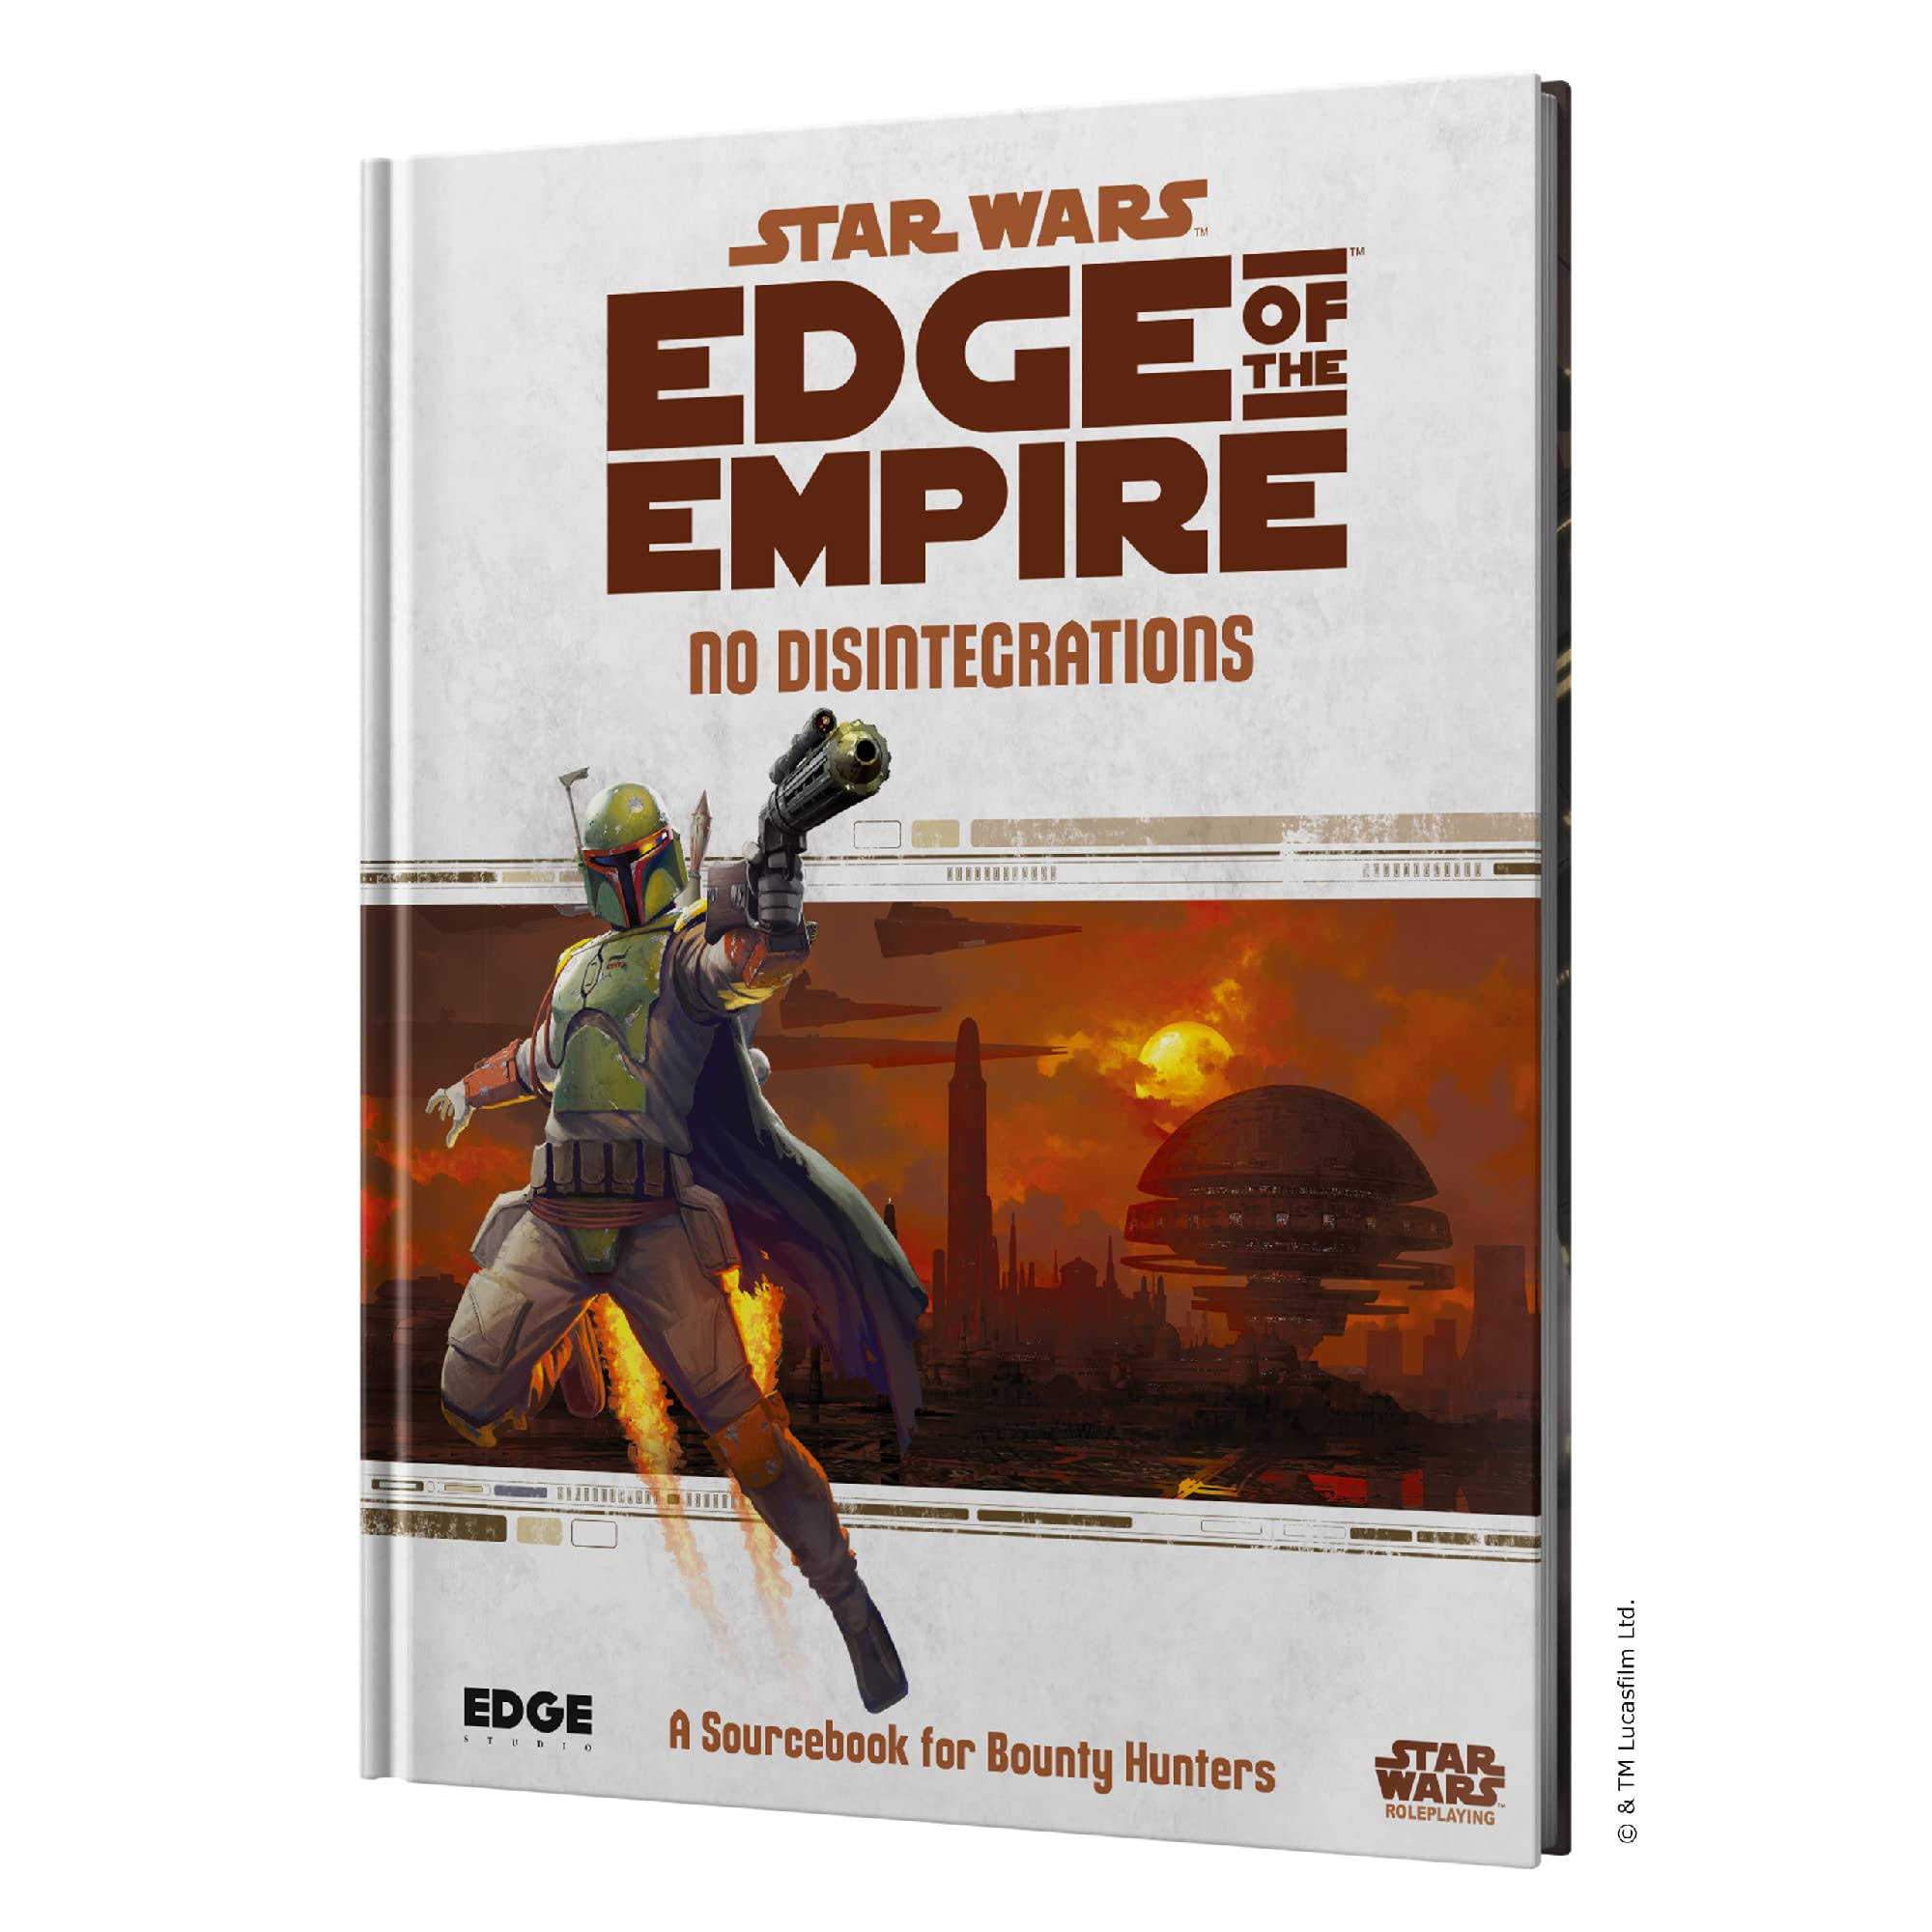 Star Wars Edge of the Empire star wars - edge empire: No Disentegrations